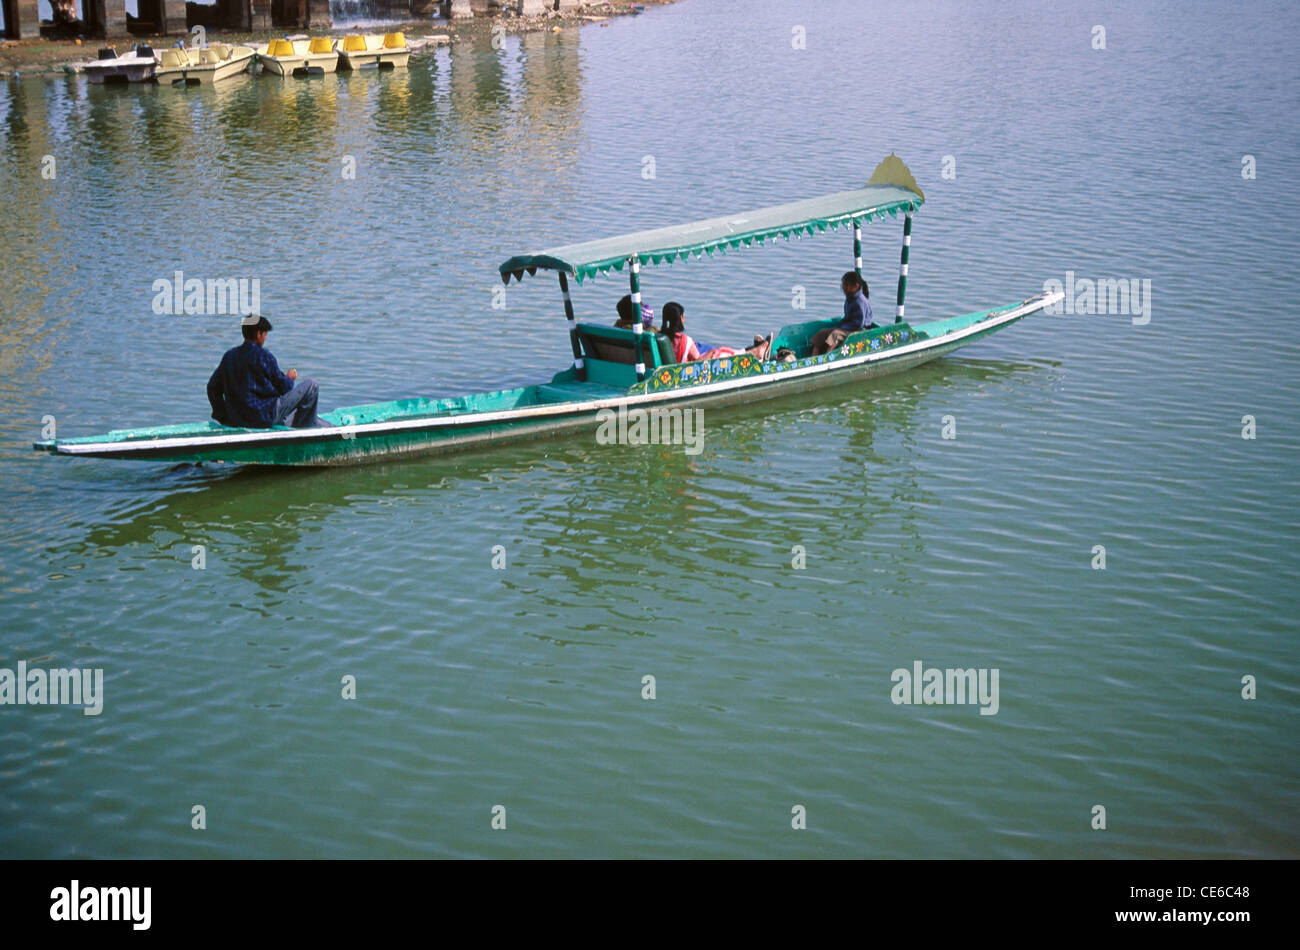 Promenade en bateau shikara dans le lac du gadisar ; jaisalmer ; rajasthan ; inde ; asie Banque D'Images